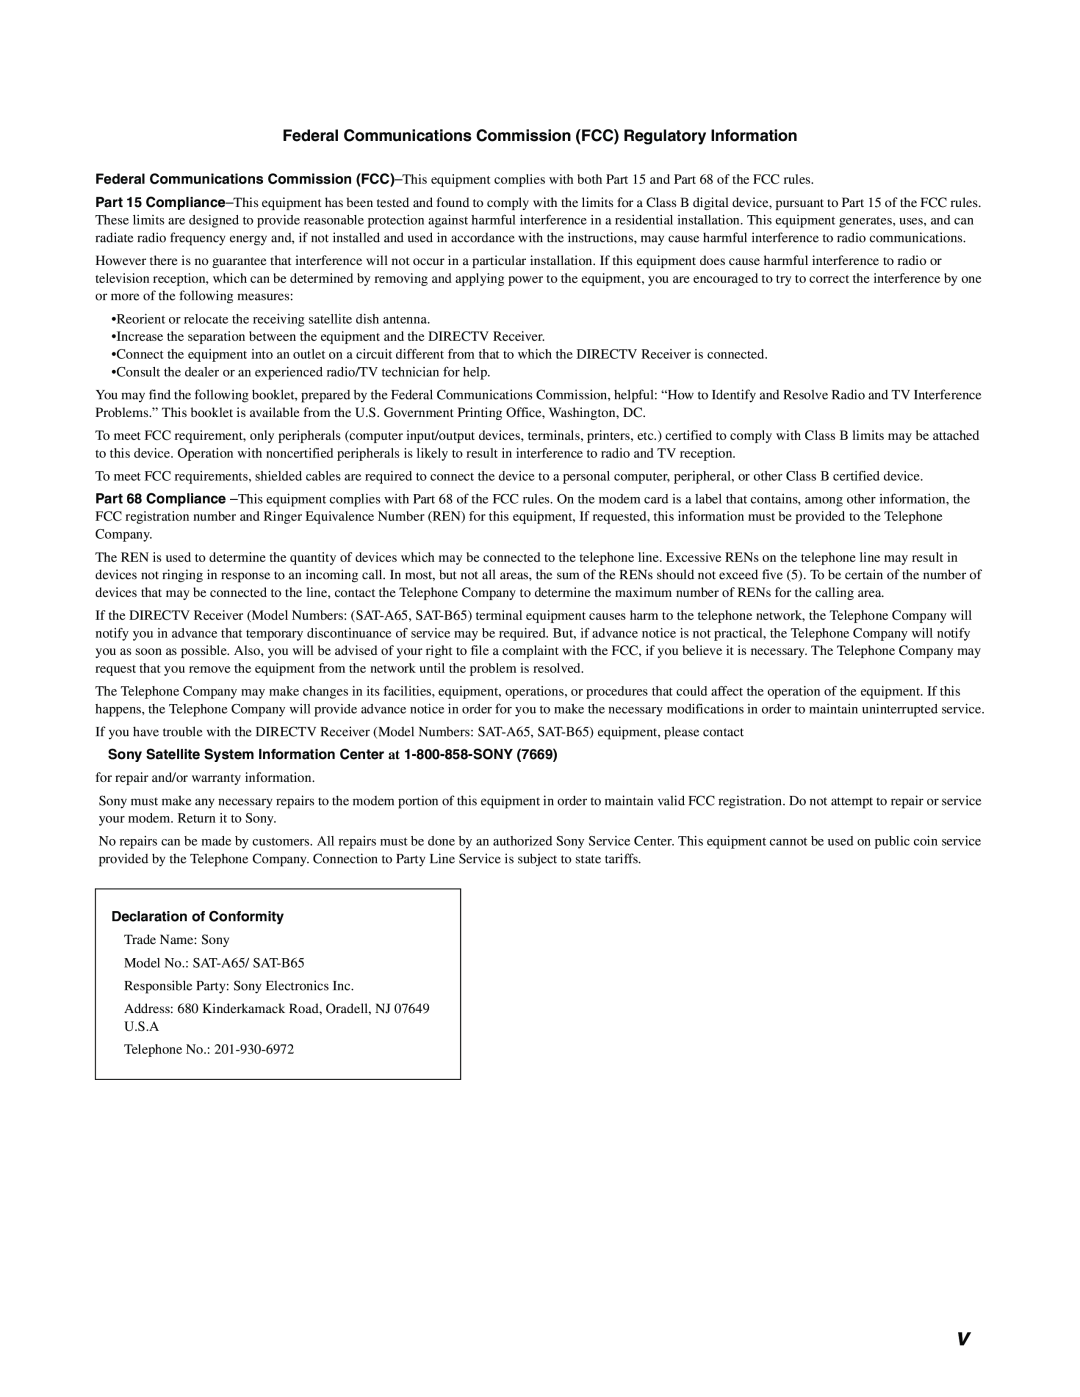 Sony SAT-B65, SAT-A65 manual Federal Communications Commission FCC Regulatory Information, Declaration of Conformity 